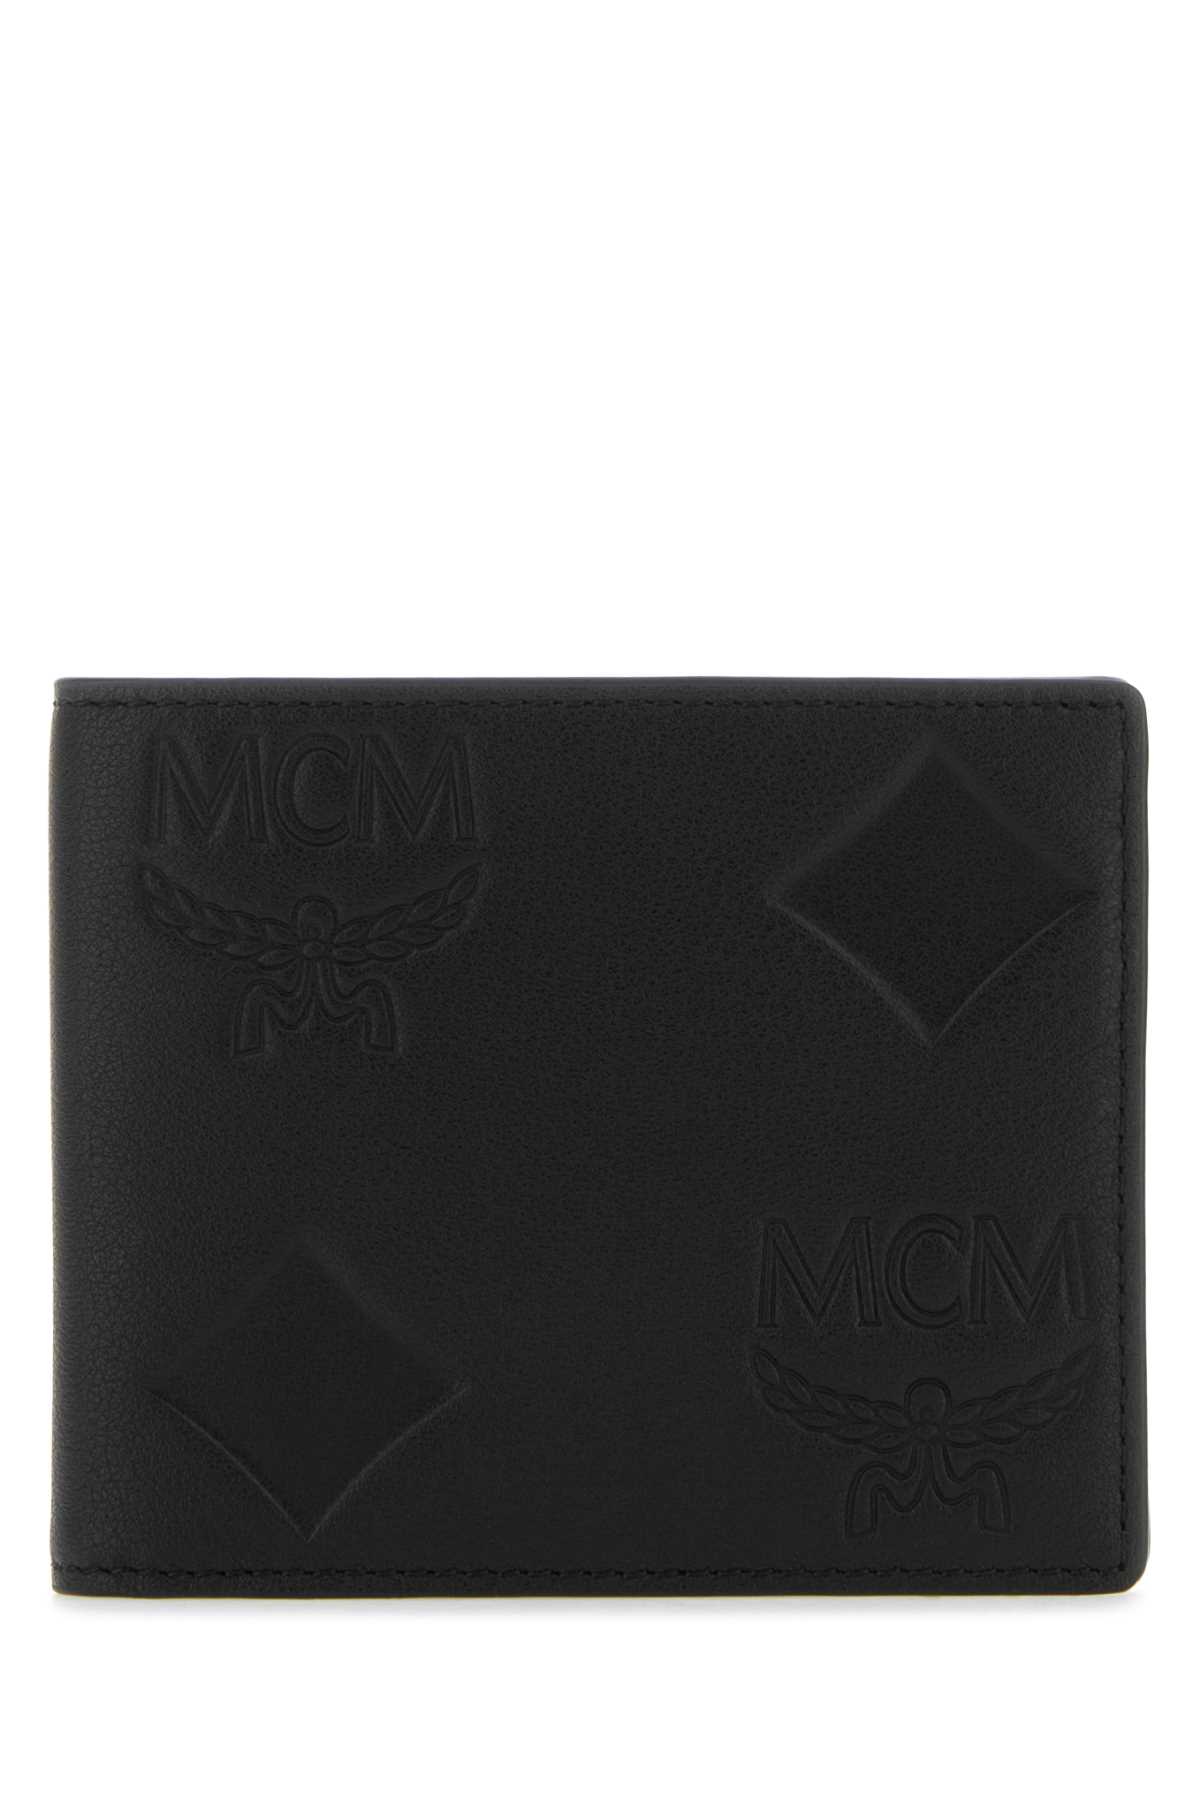 Shop Mcm Black Leather Wallet